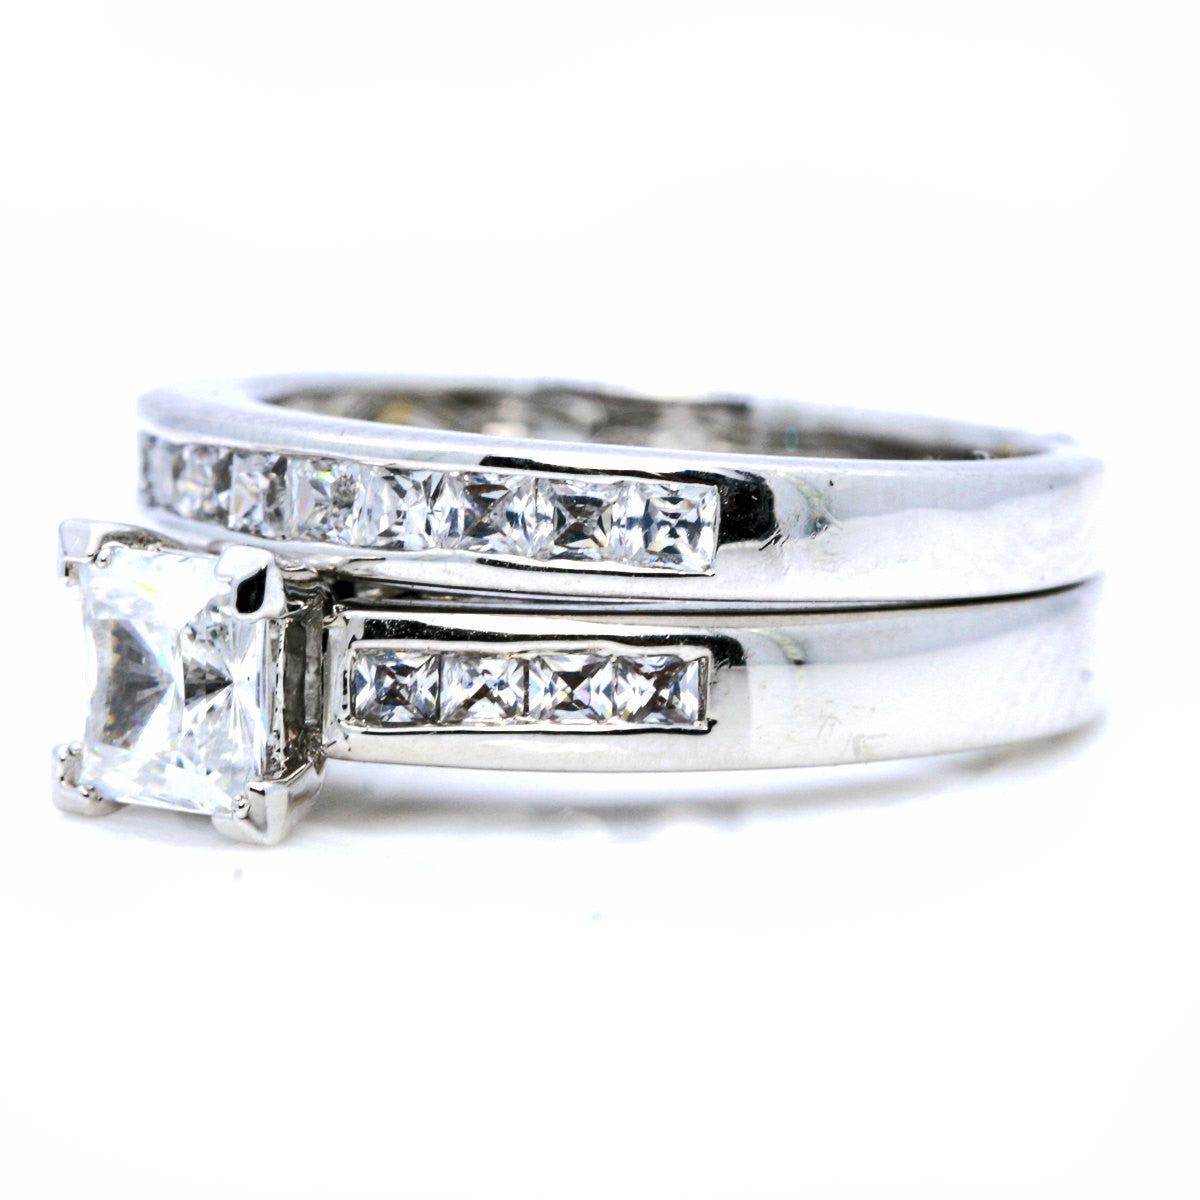 Semi Mount Setting for 1 Carat Princess Cut Center Stone Engagement/Wedding Ring Set, .90 Carat Princess cut Diamonds - 76342